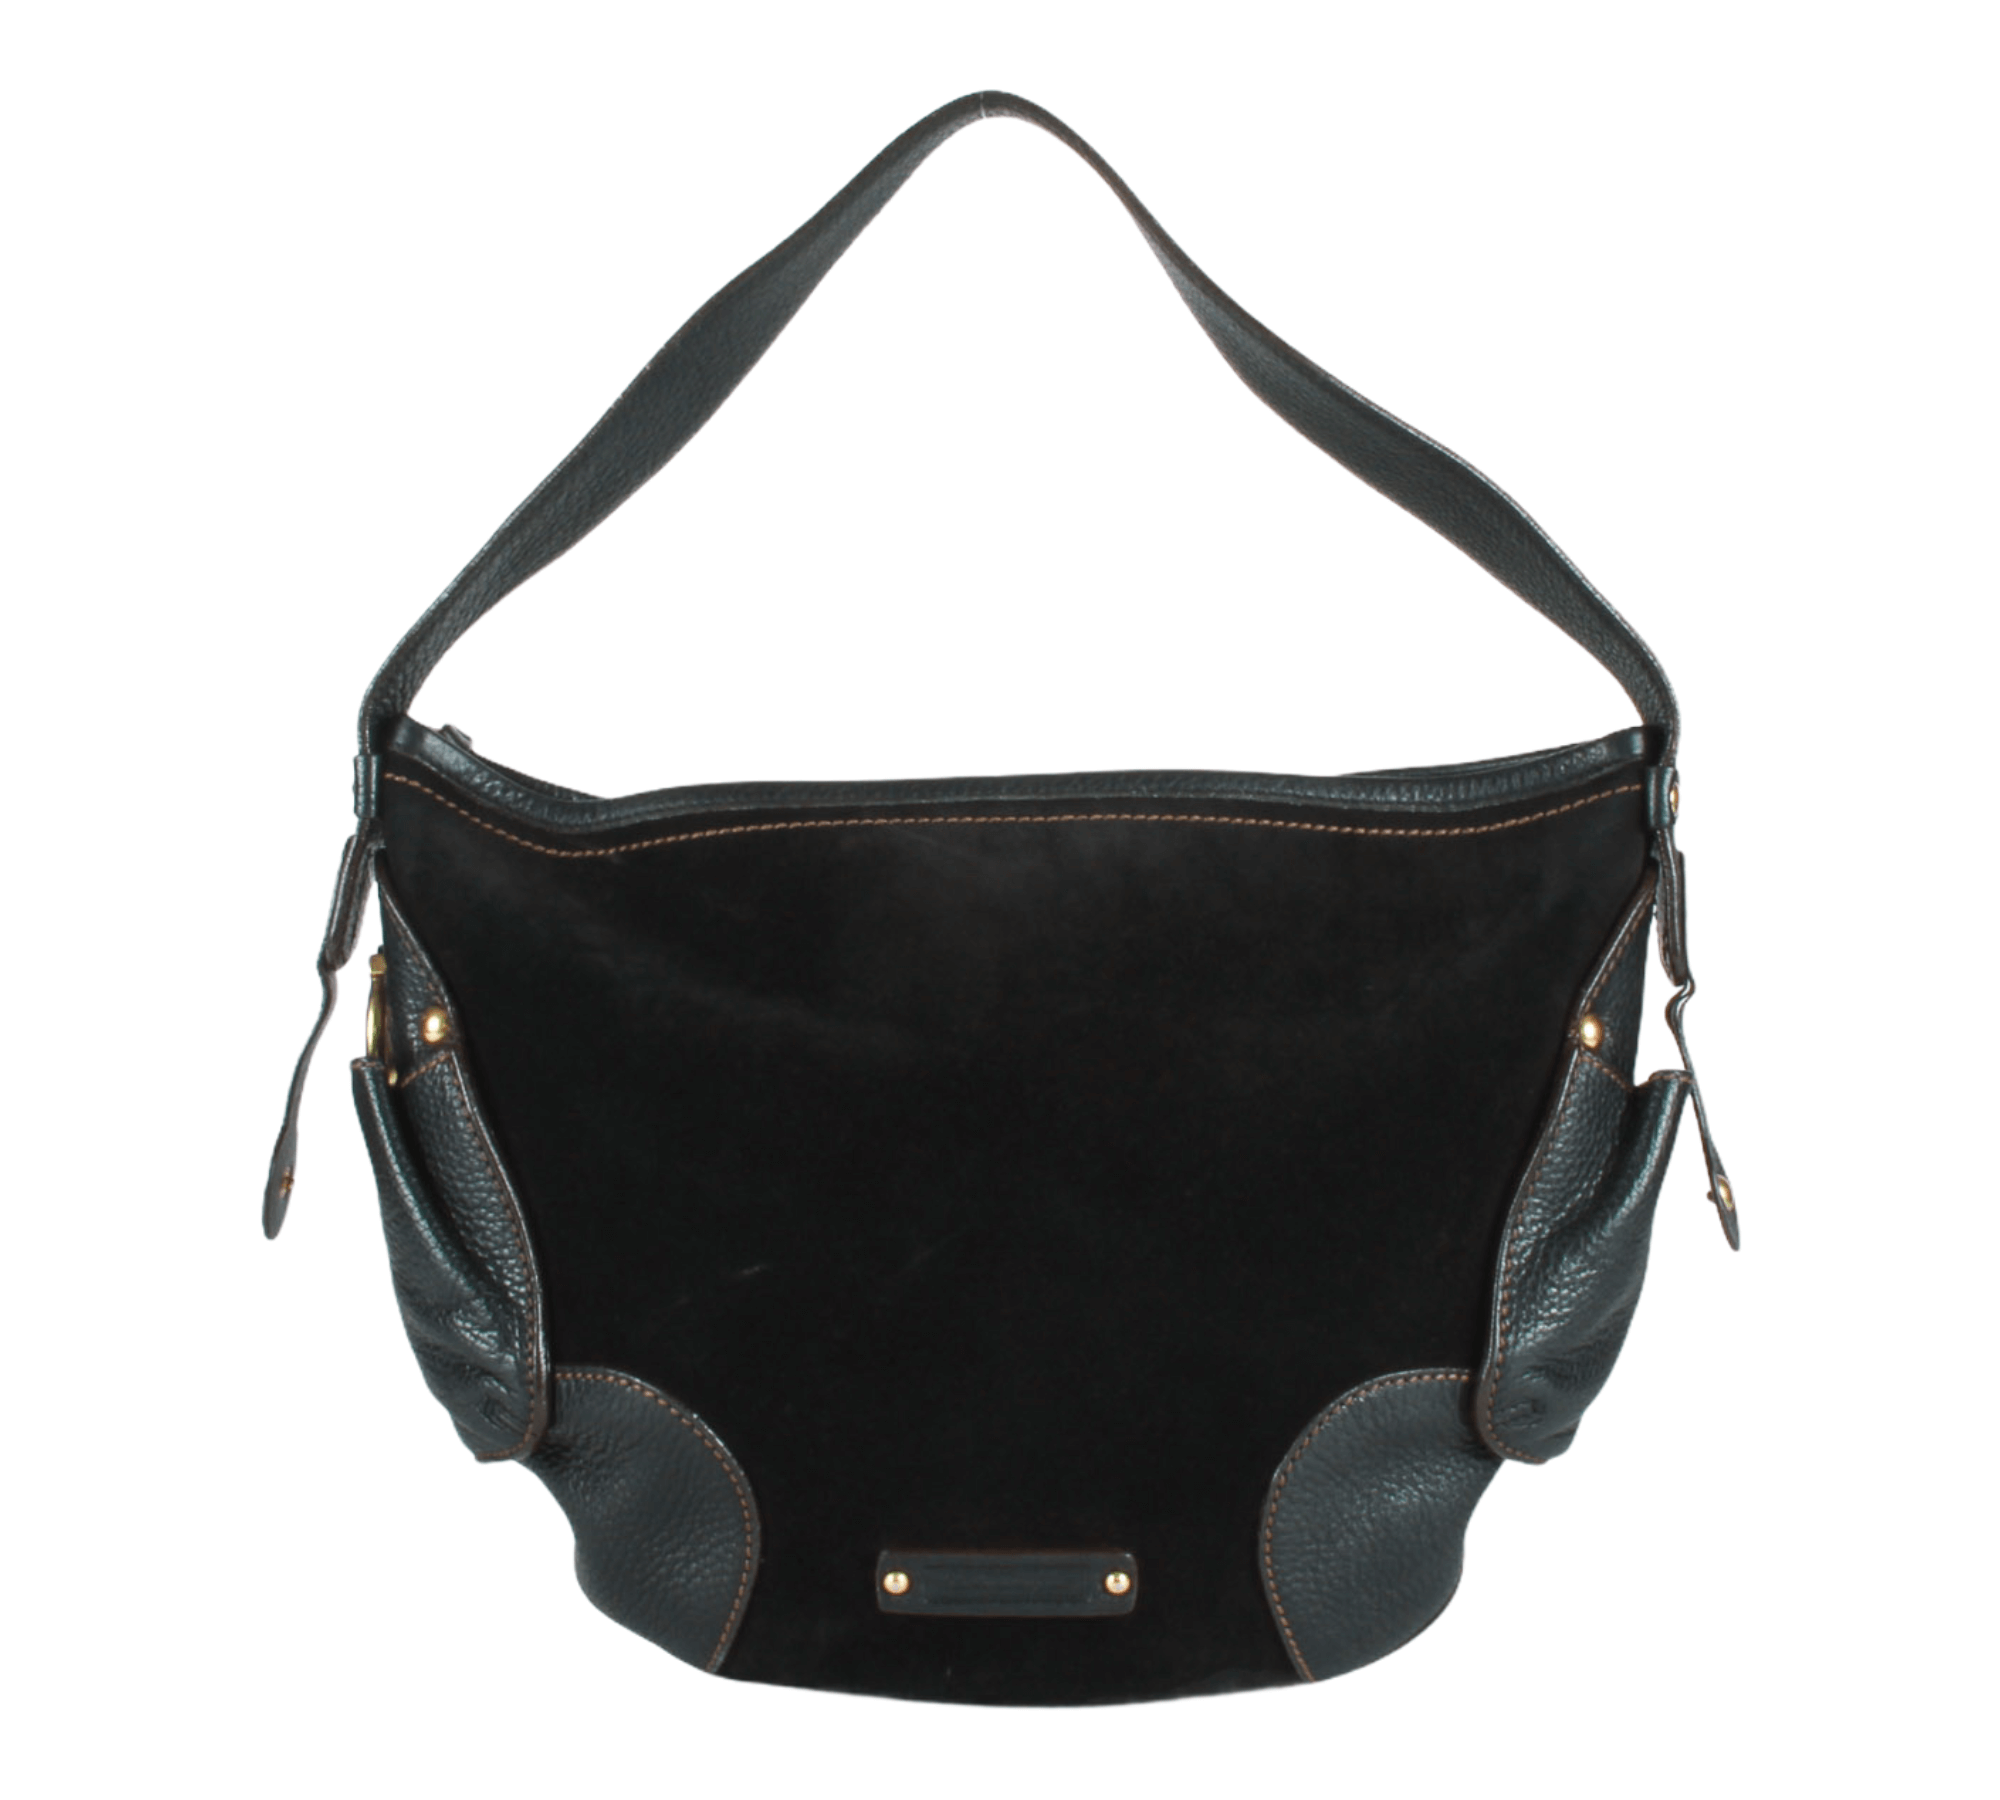 Ferragamo Small Leather Hobo Shoulder Bag